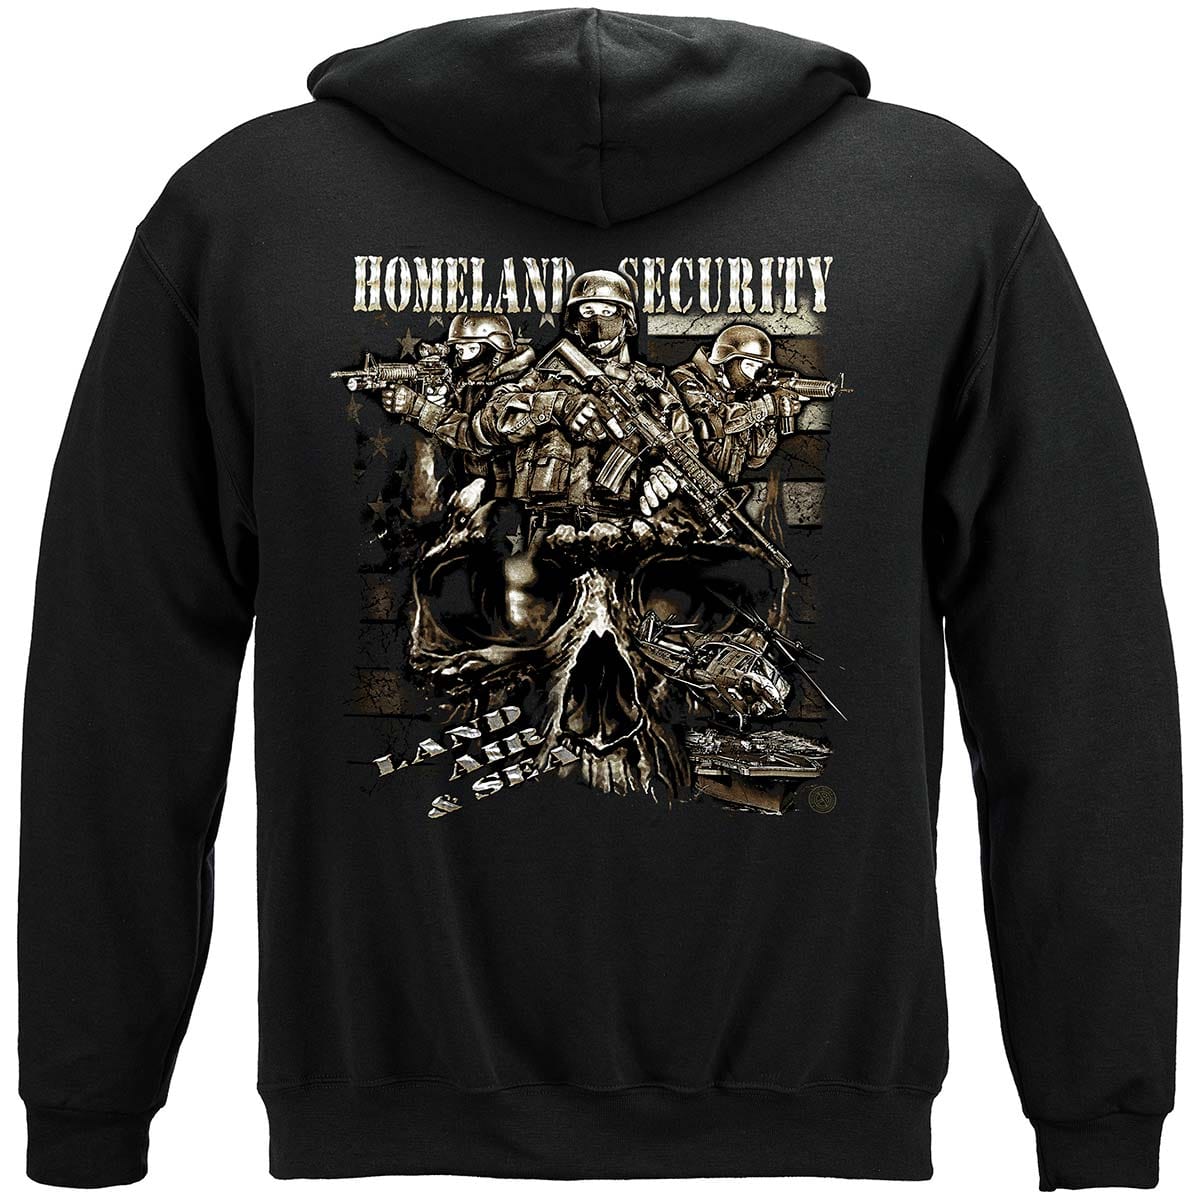 Homeland Security Land Air and Sea Premium T-Shirt